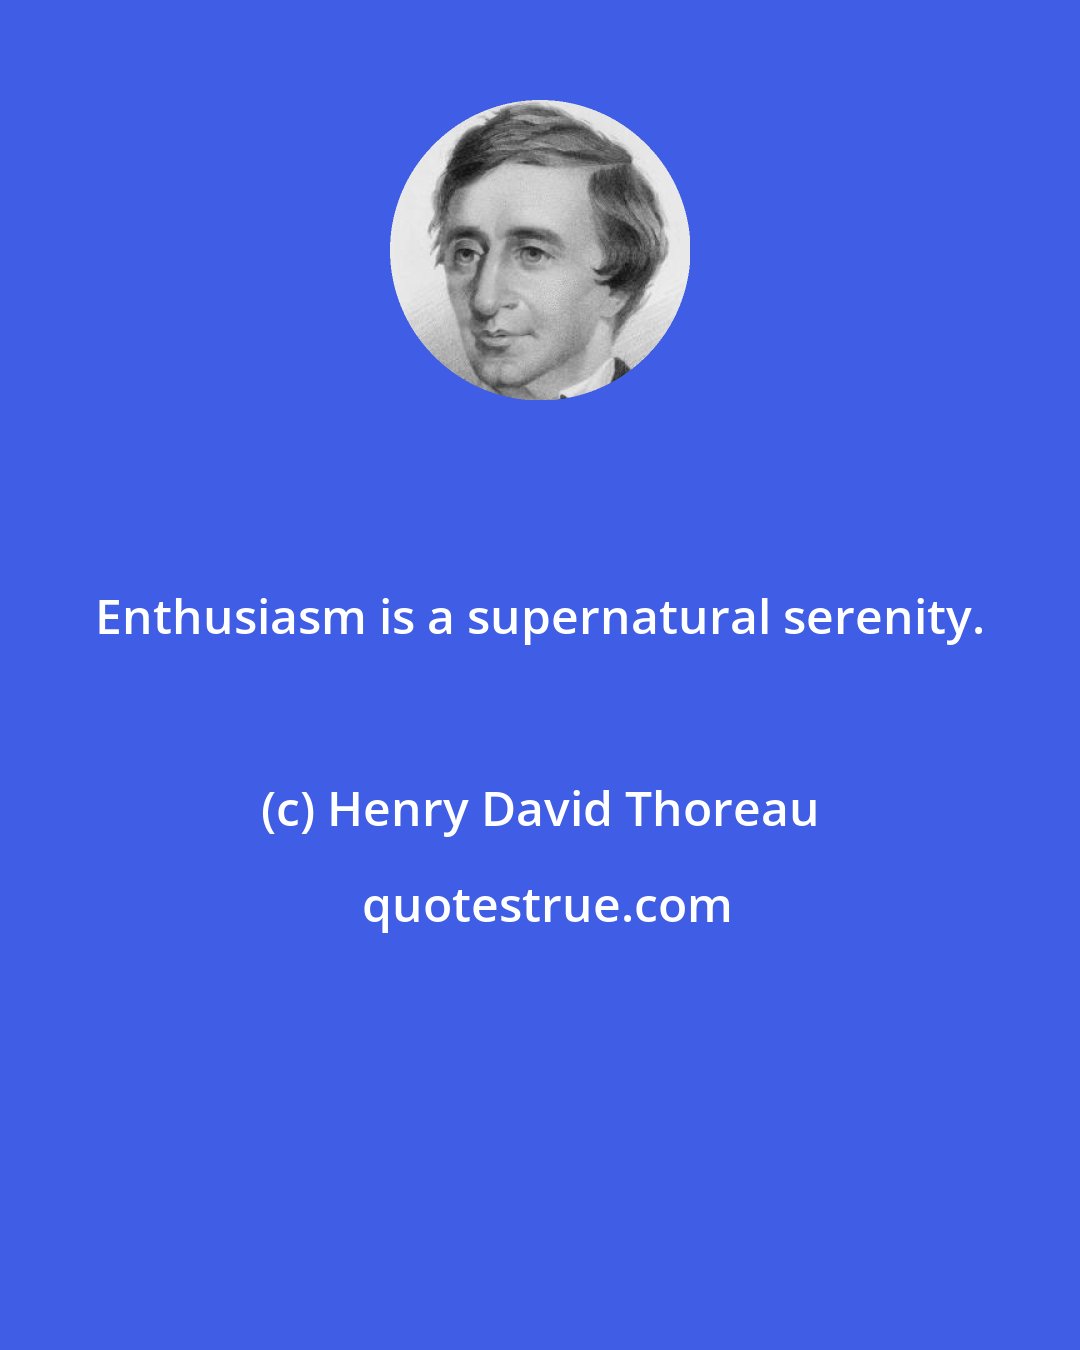 Henry David Thoreau: Enthusiasm is a supernatural serenity.